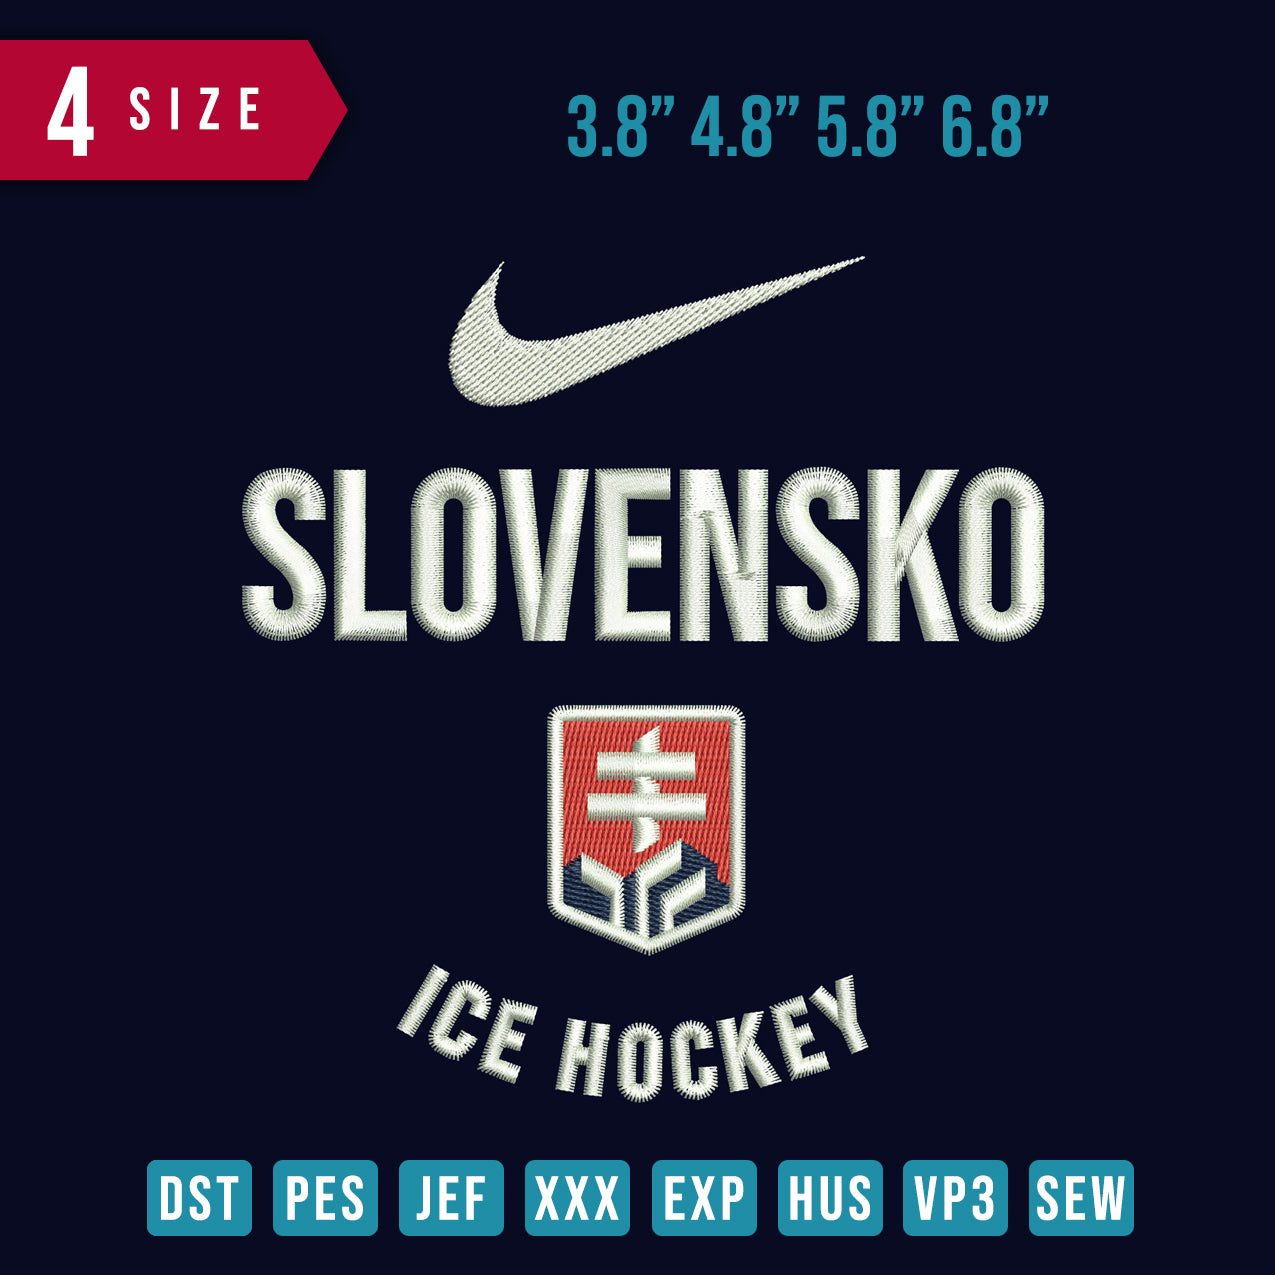 Swoosh Slovensko